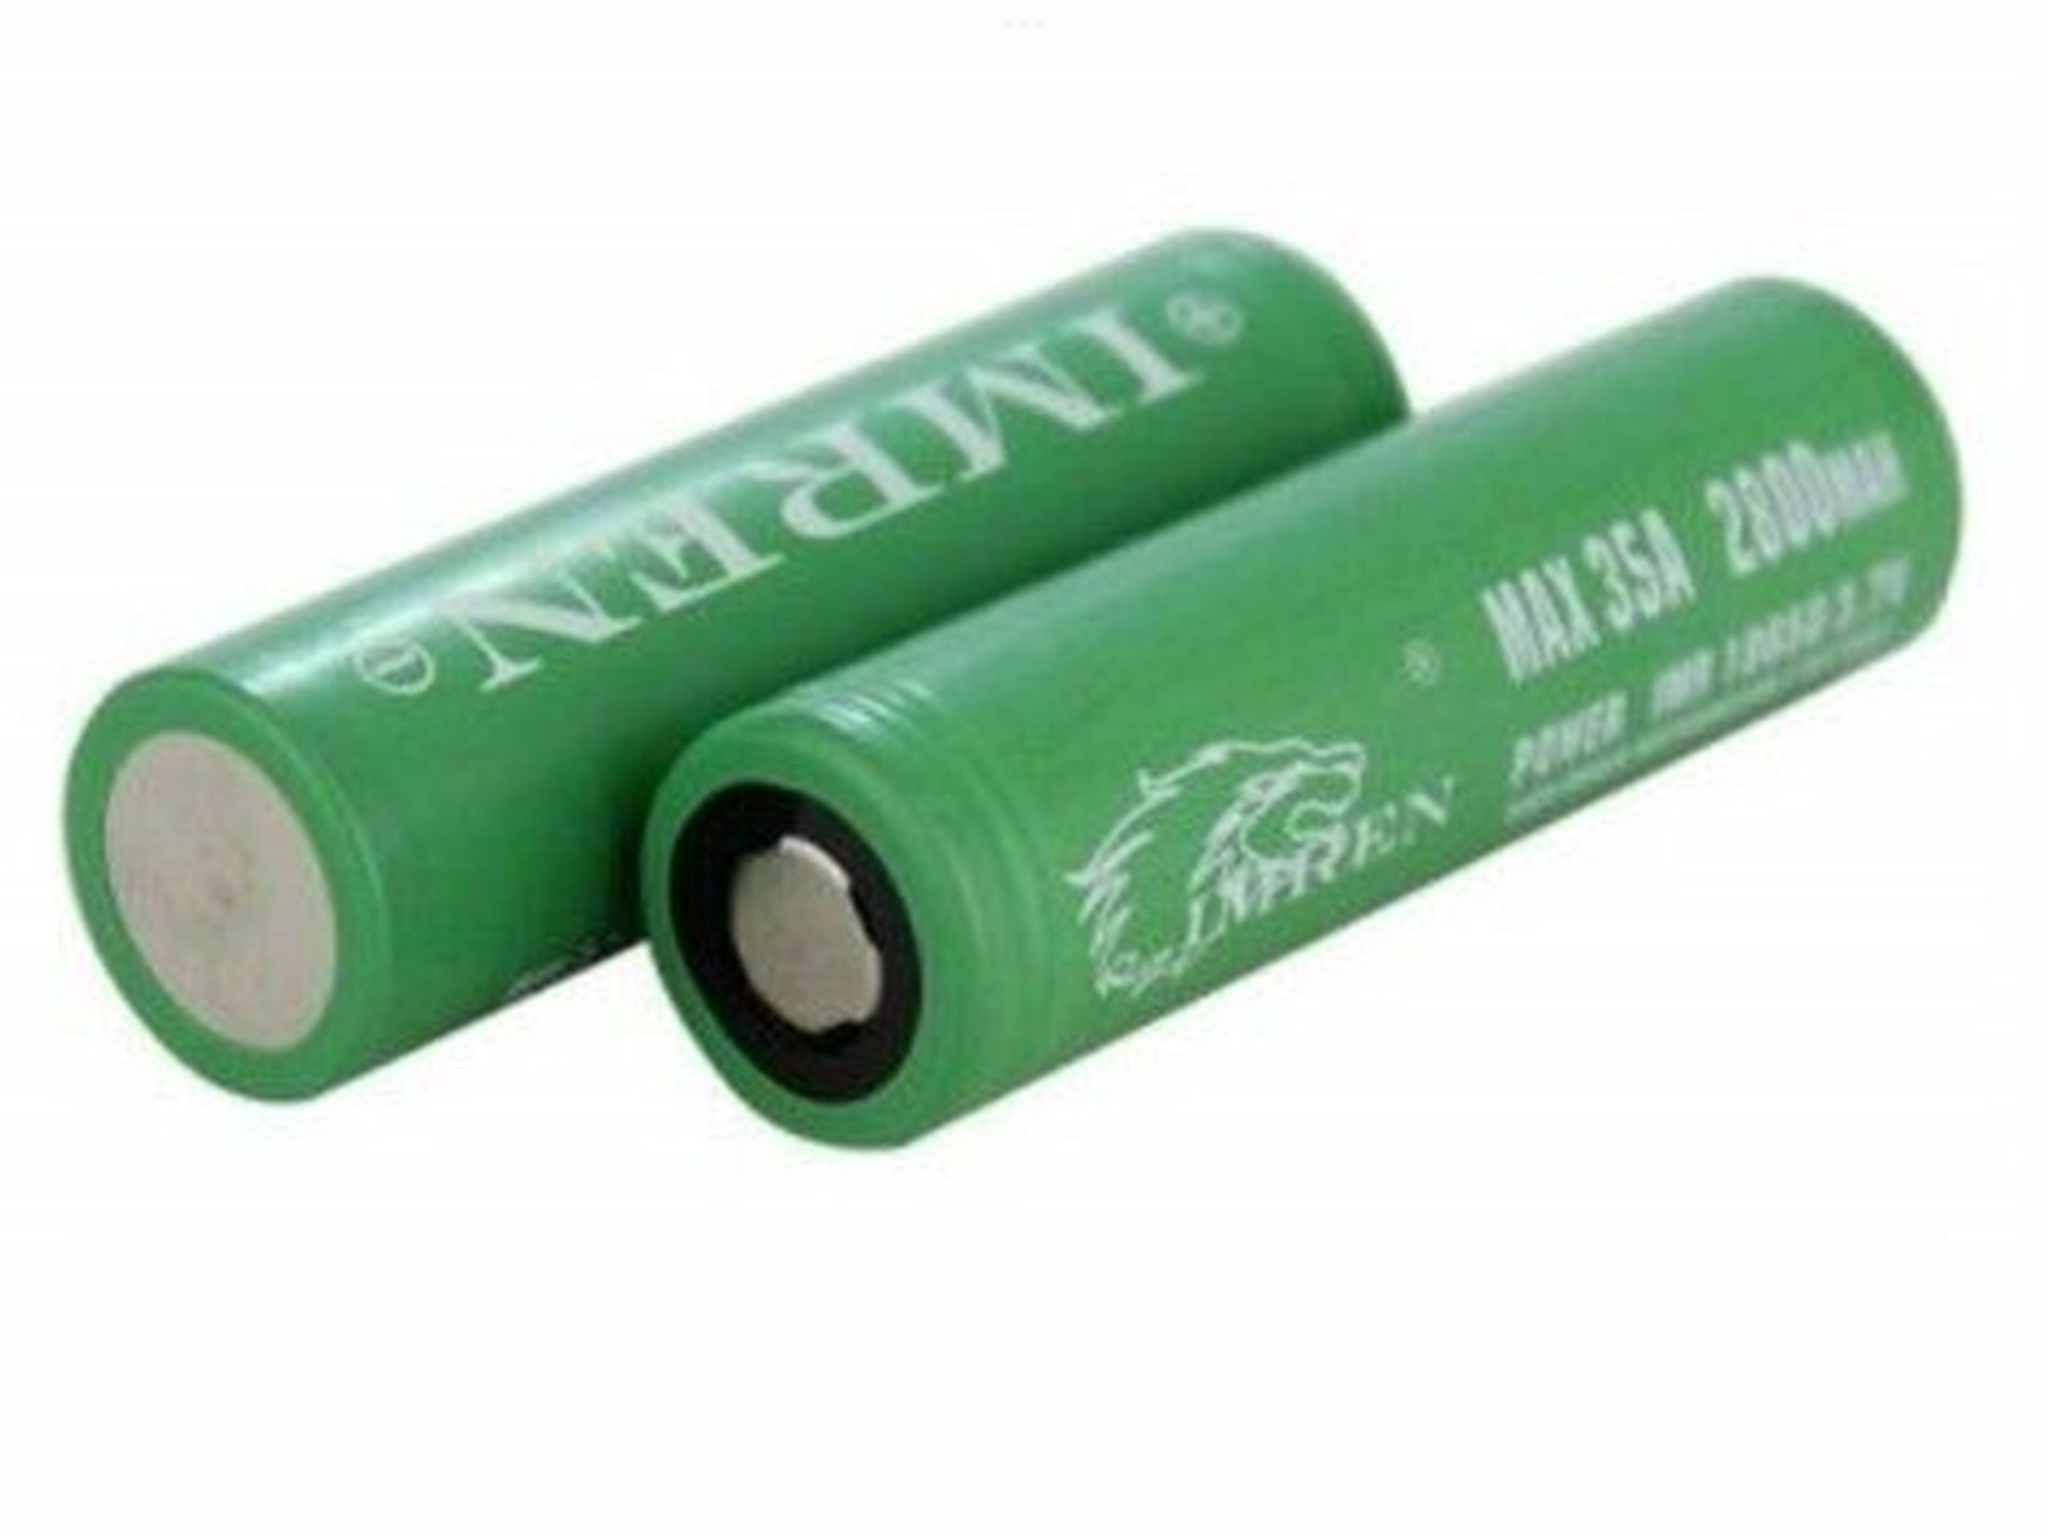 18650 Battery Wraps - 10pcs - Translucent Green - IMR Batteries